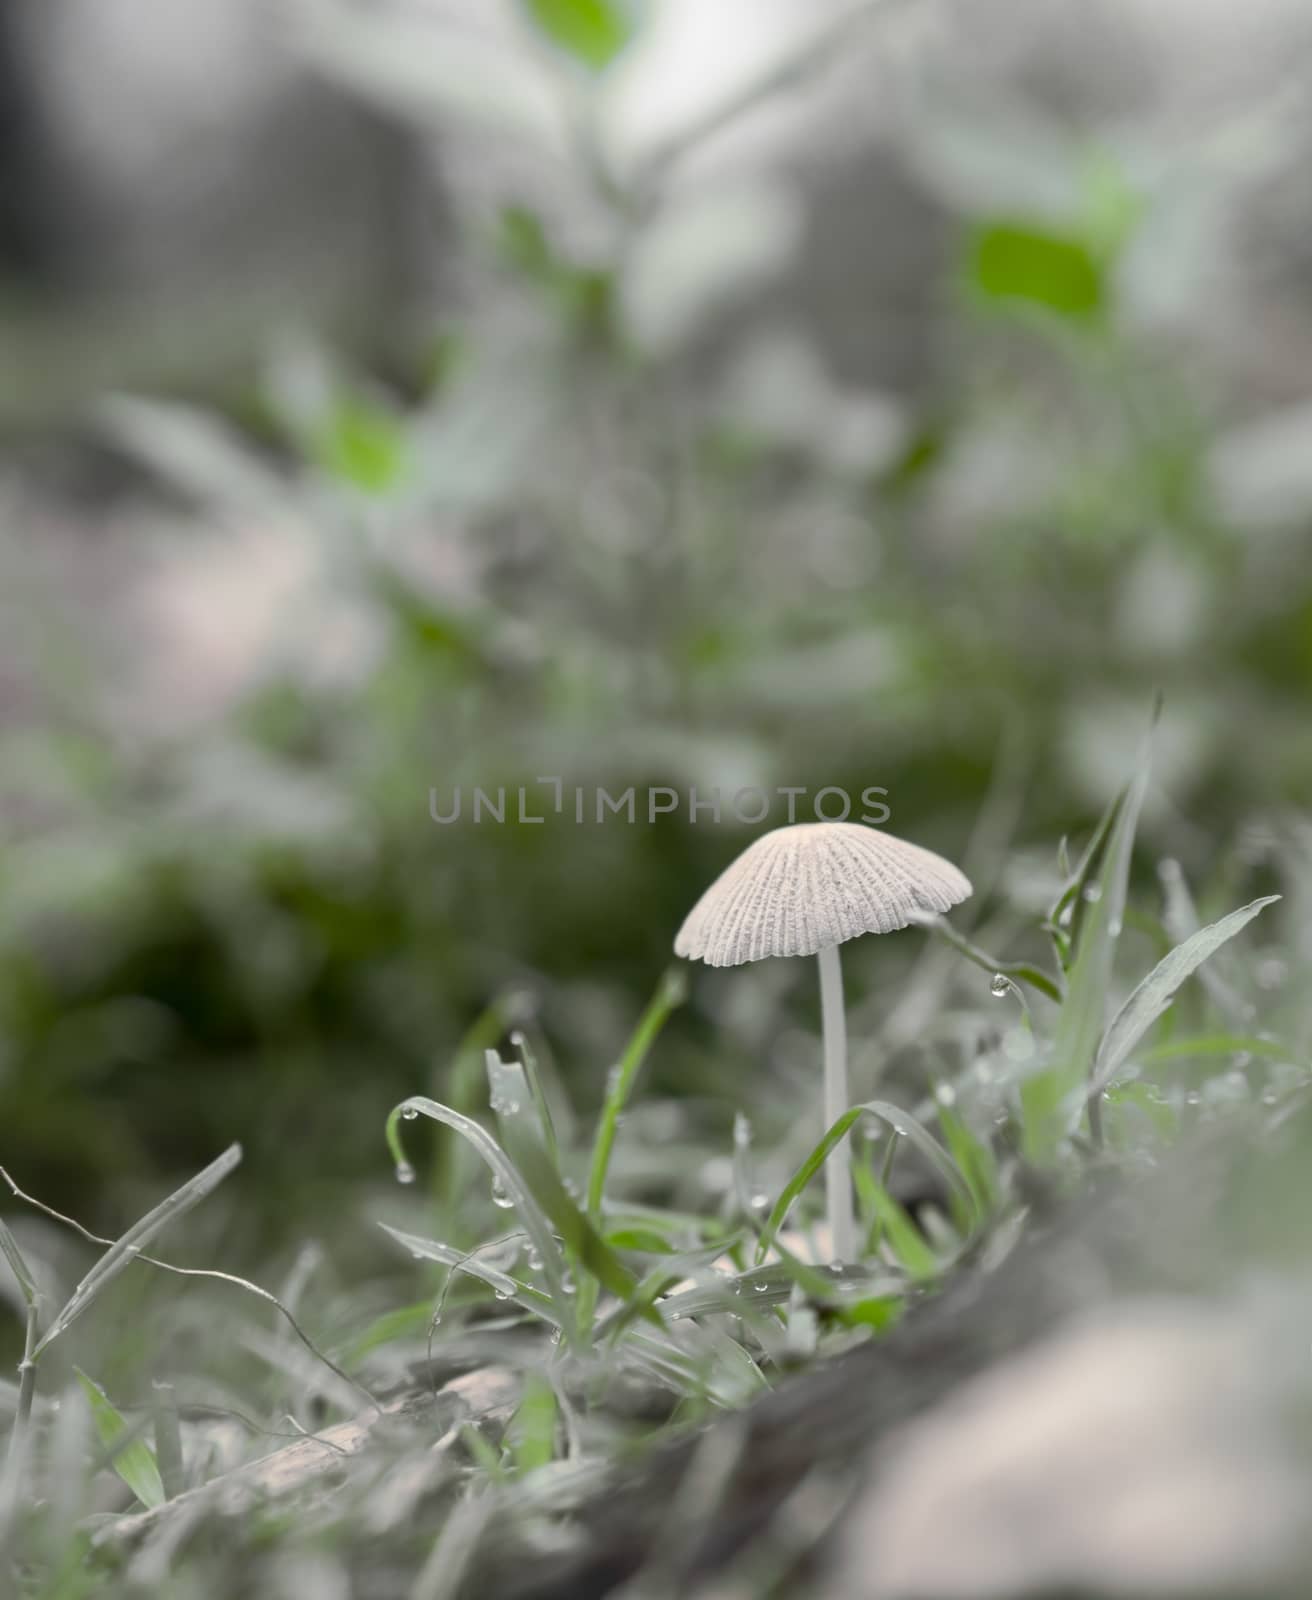 Mushroom growing by sherj